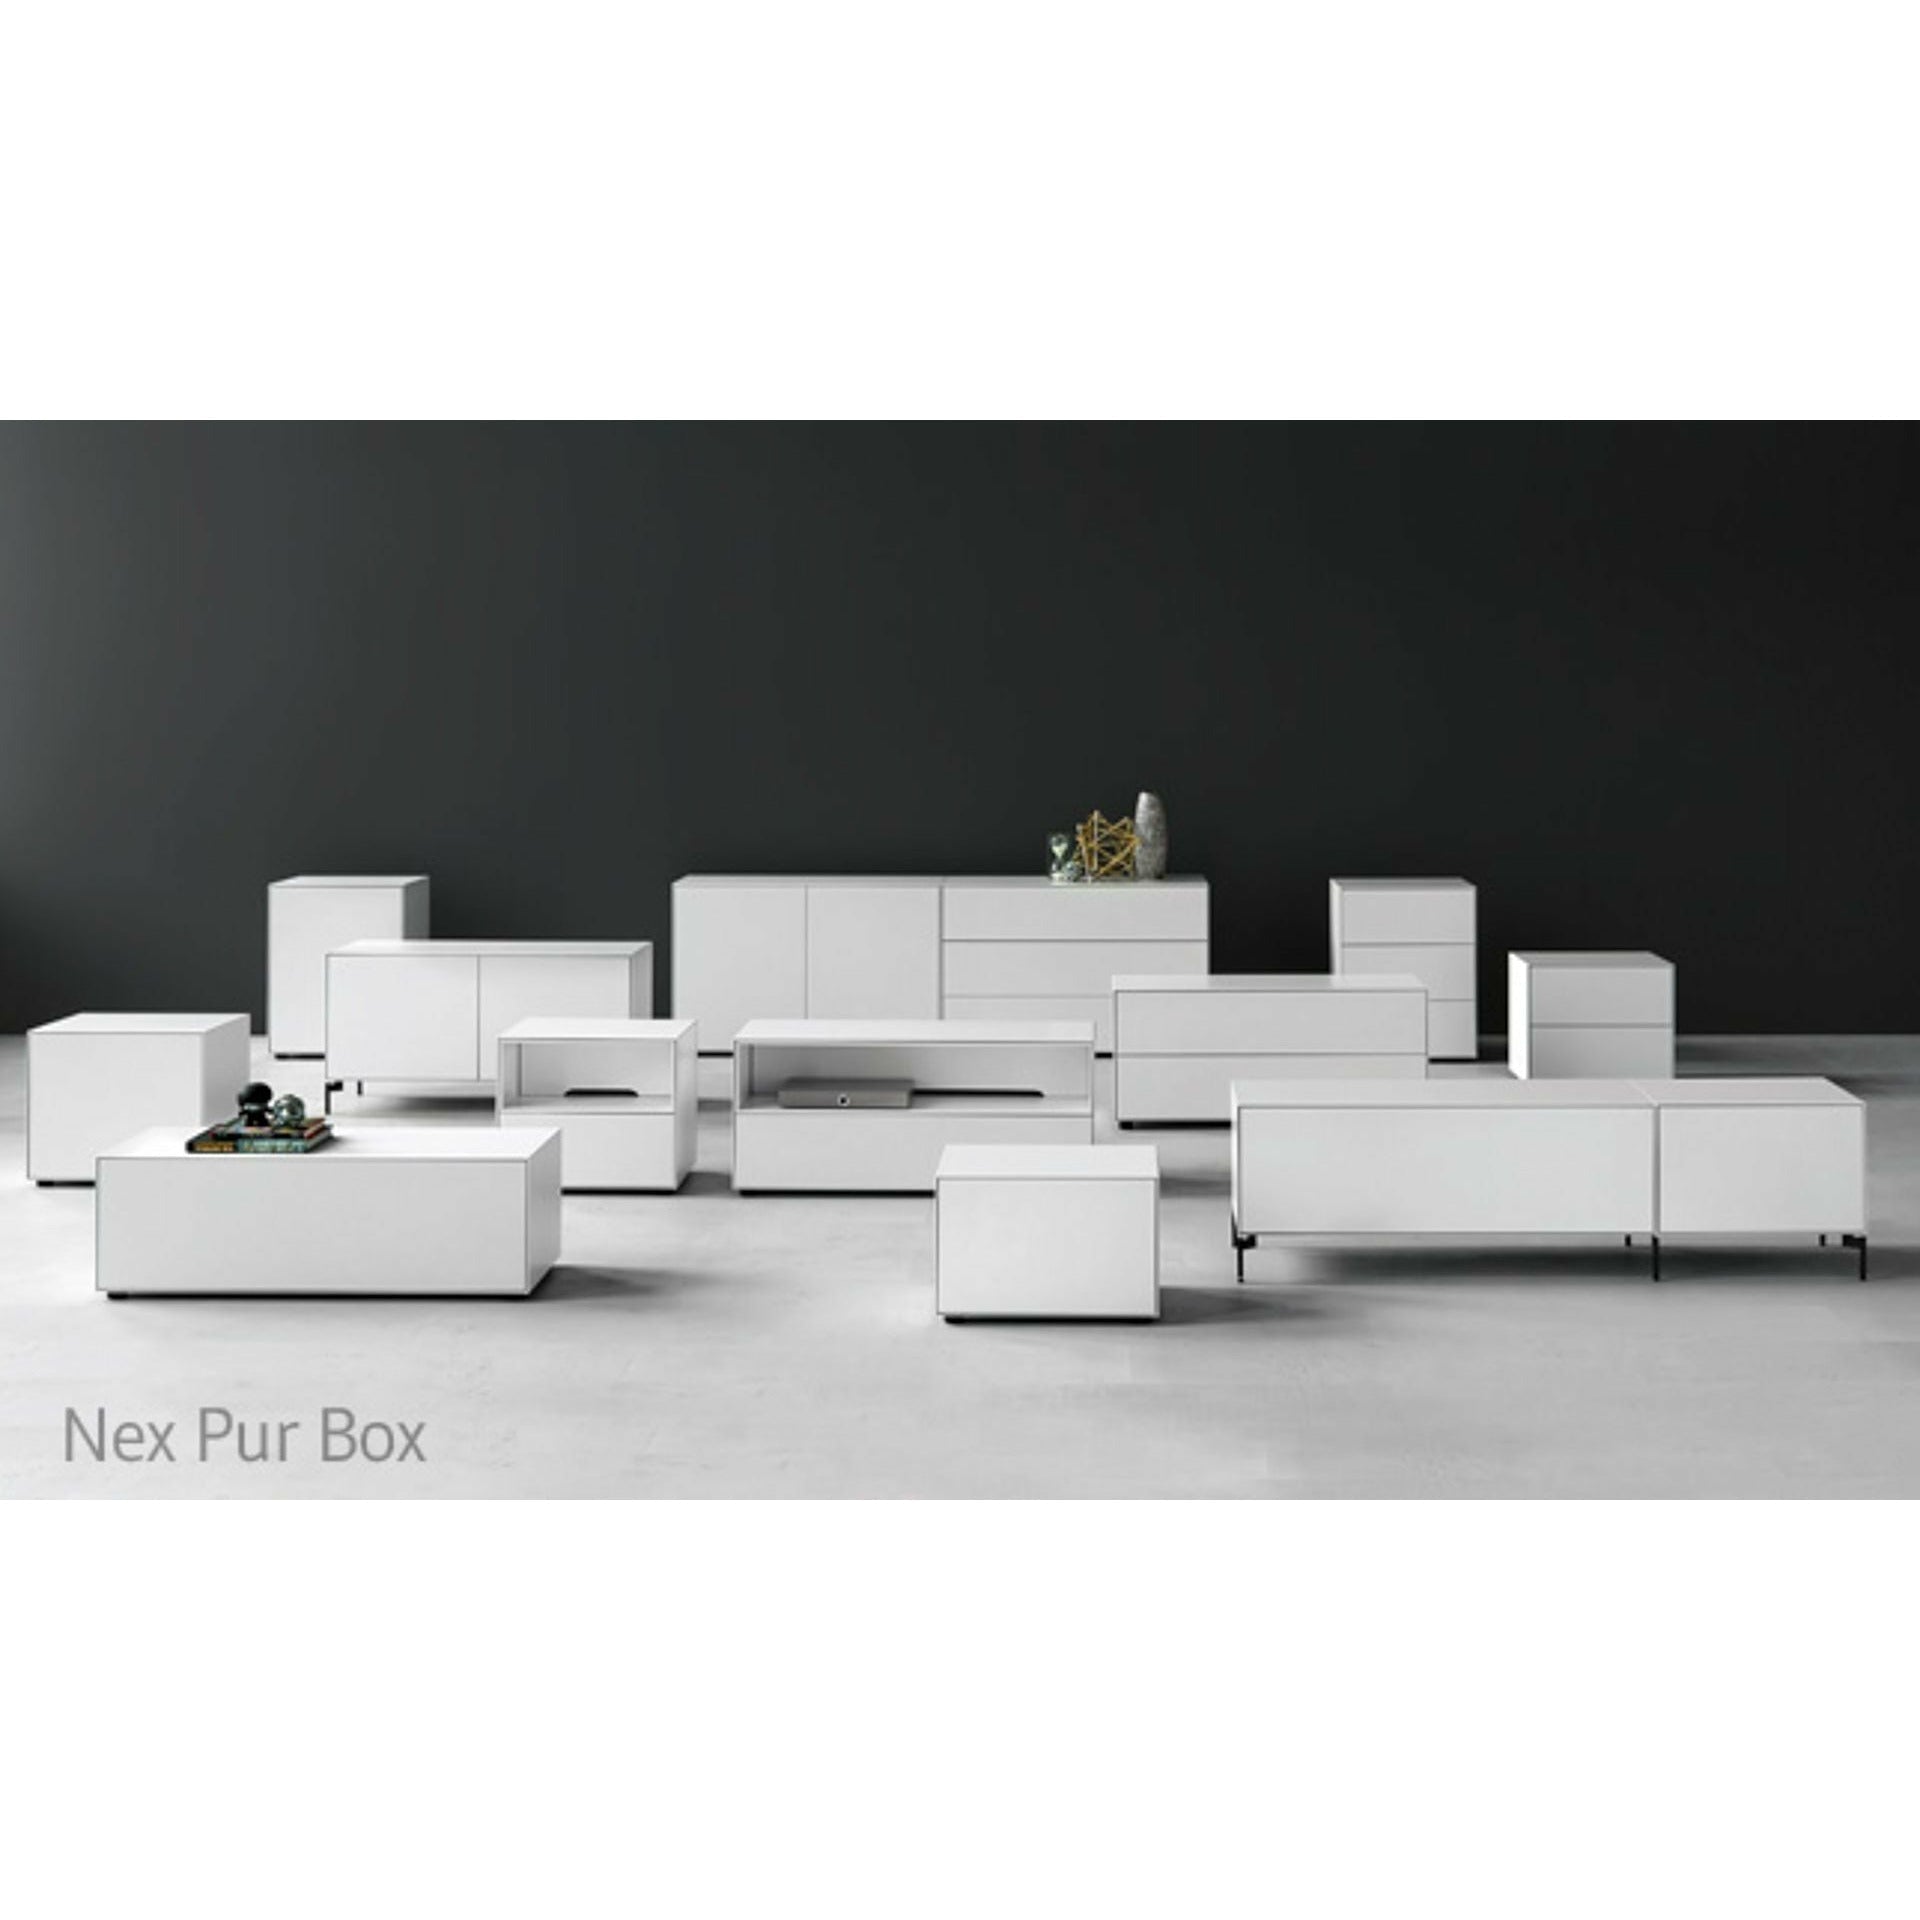 Piure Nex Pur Box -låda HXB 50x120 cm, 2 lådor